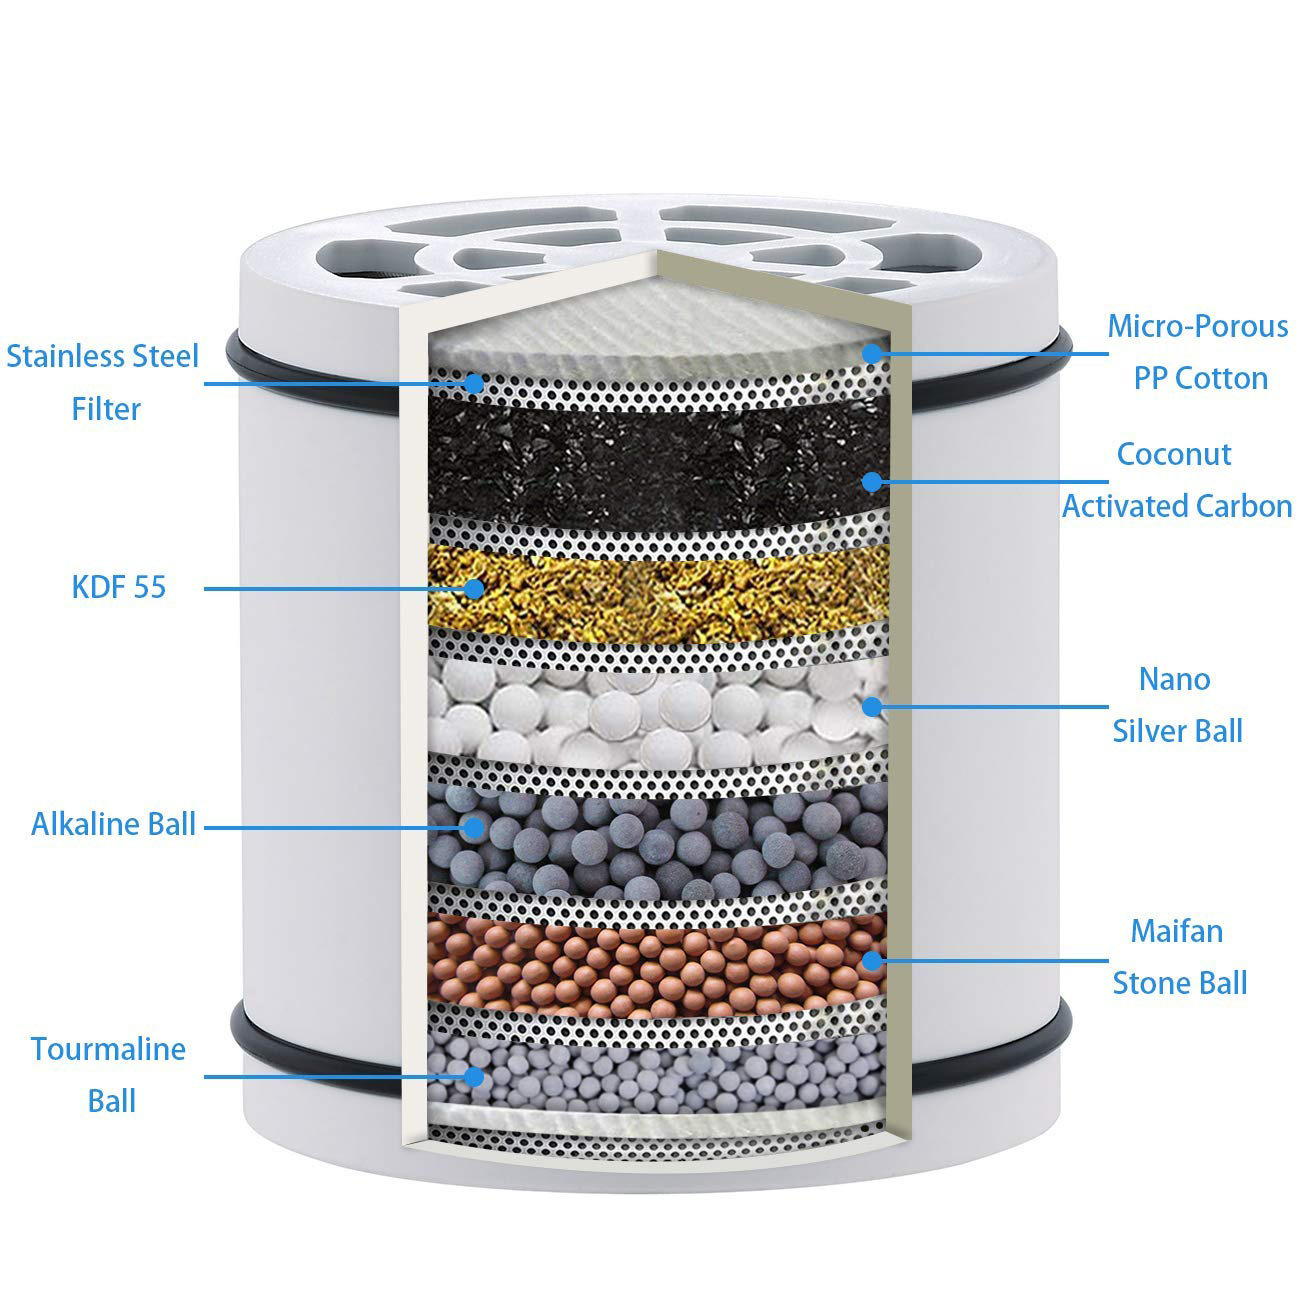 Details about   Shower Head Filter Cartridge Kit 15 Stage Chlorine Hard Water Softener Purifier 